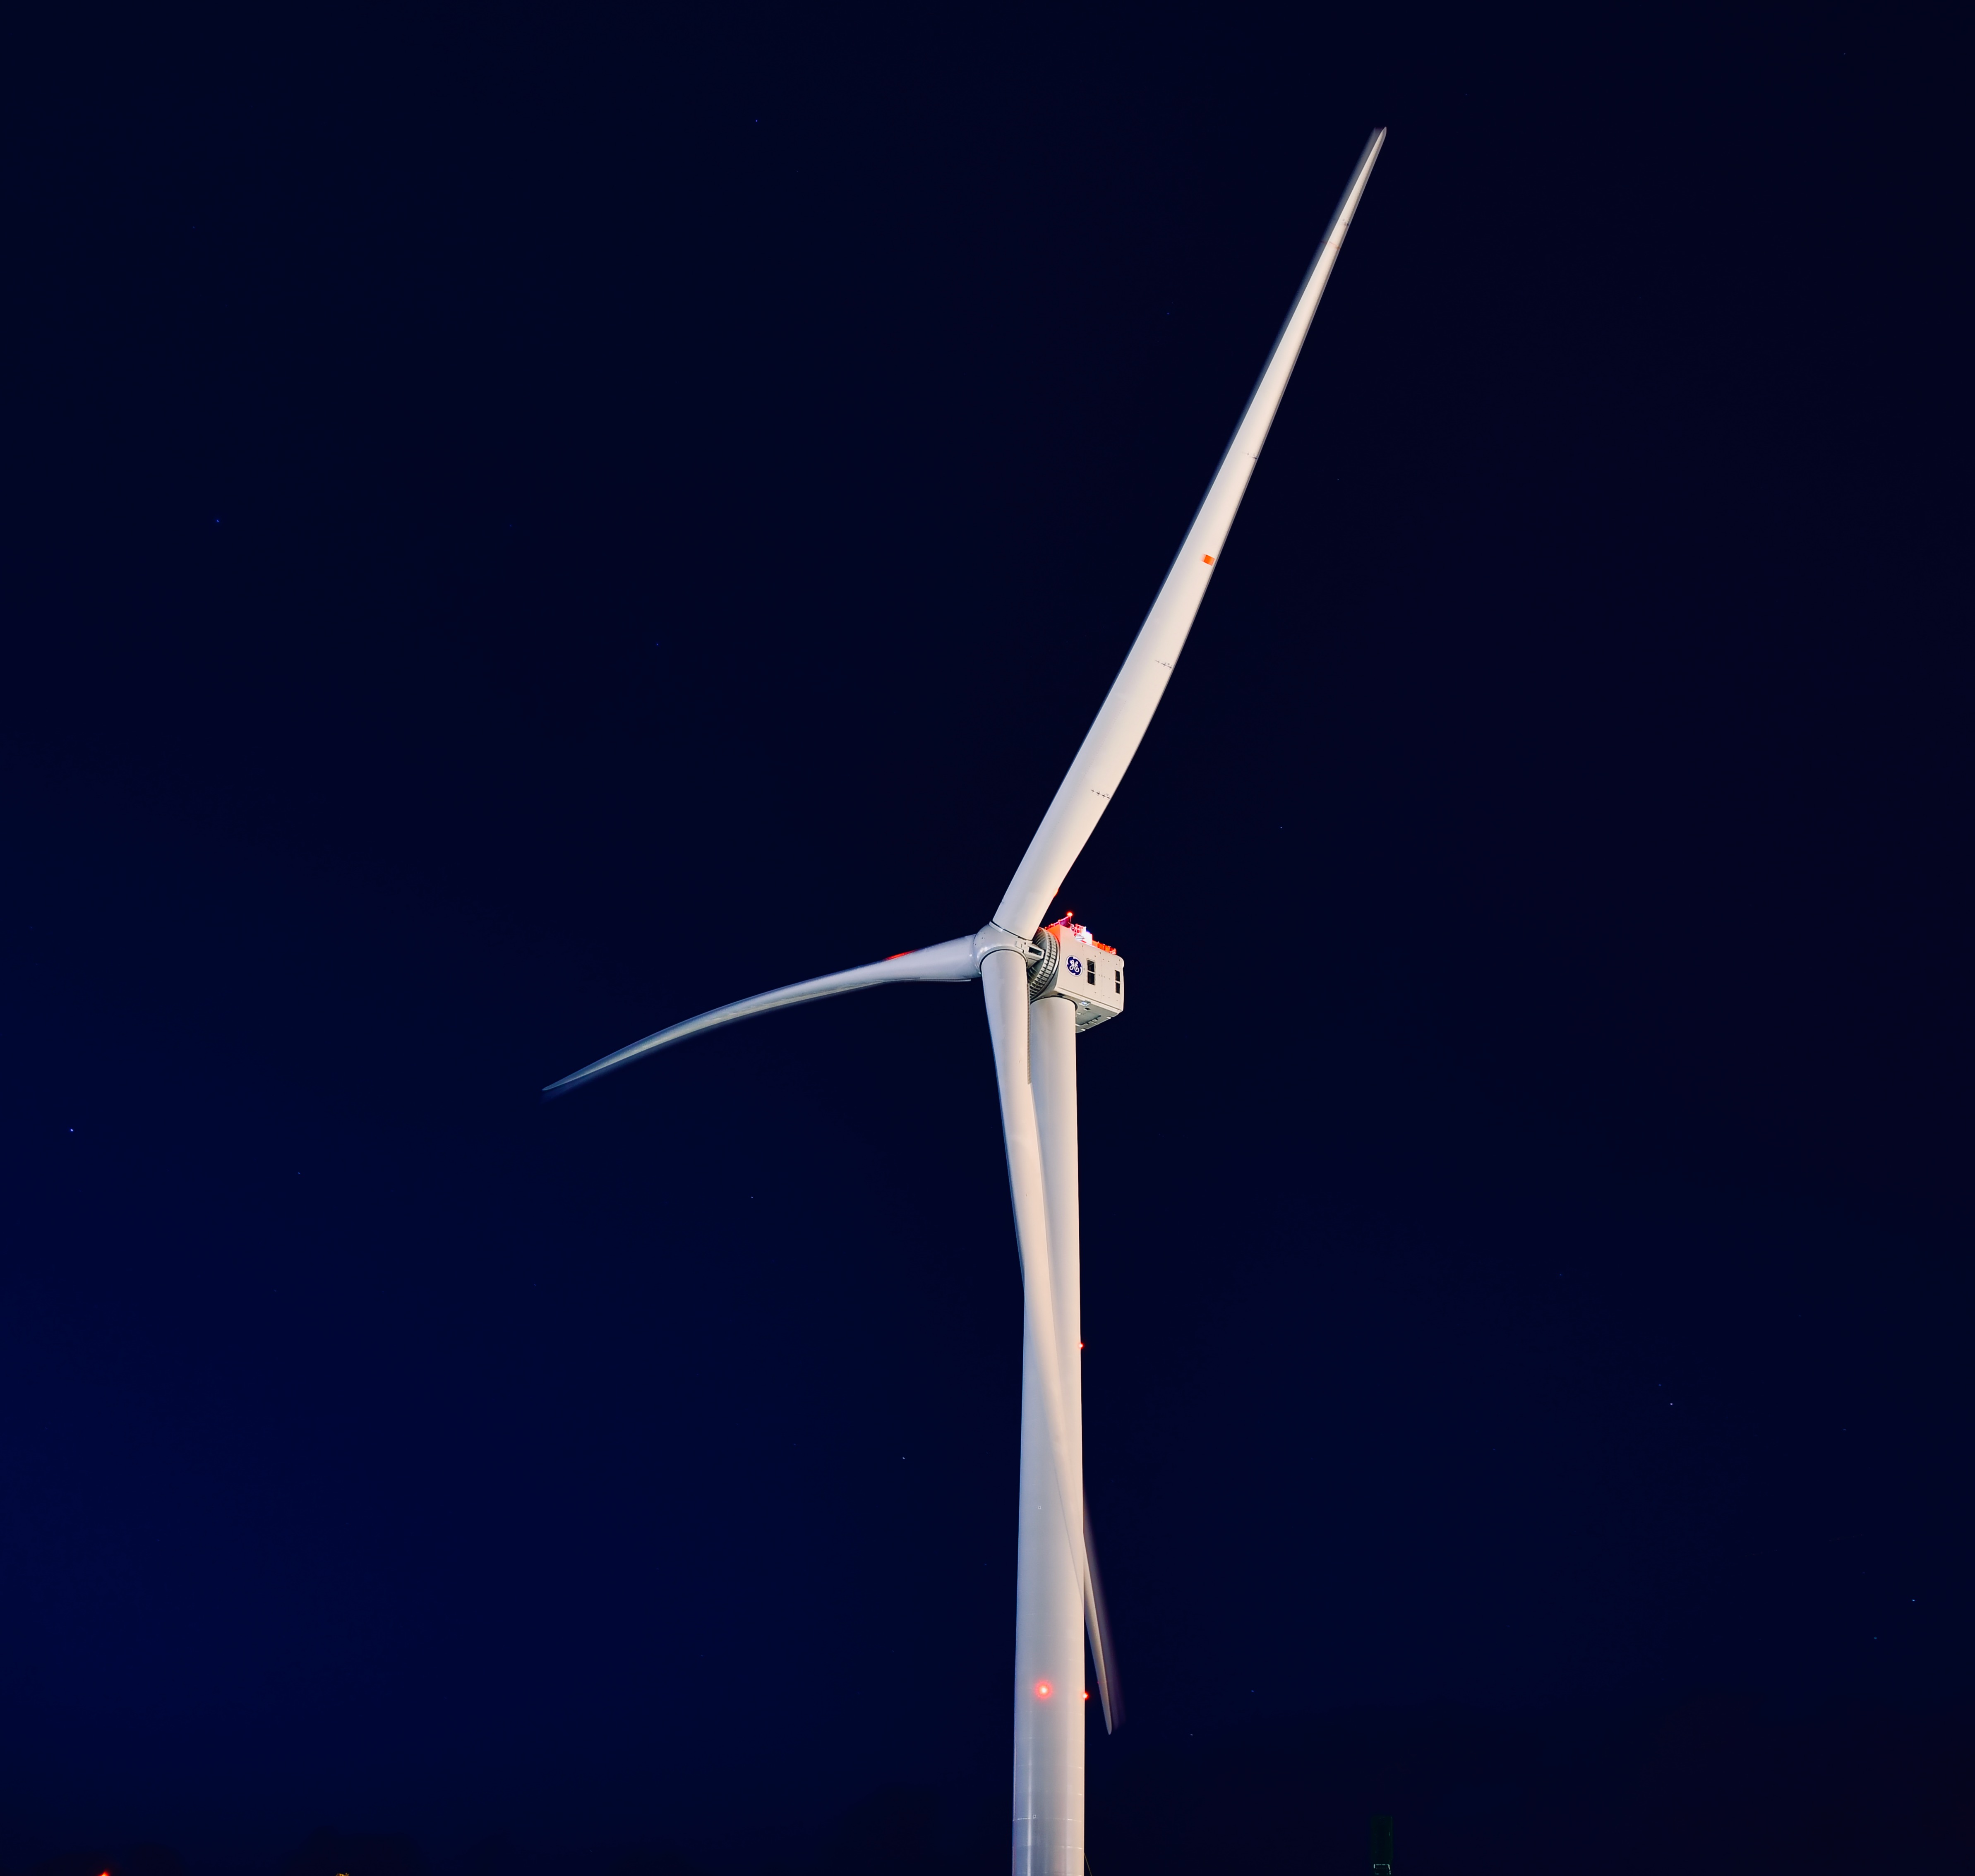 GE Haliade-X wind turbine prototype